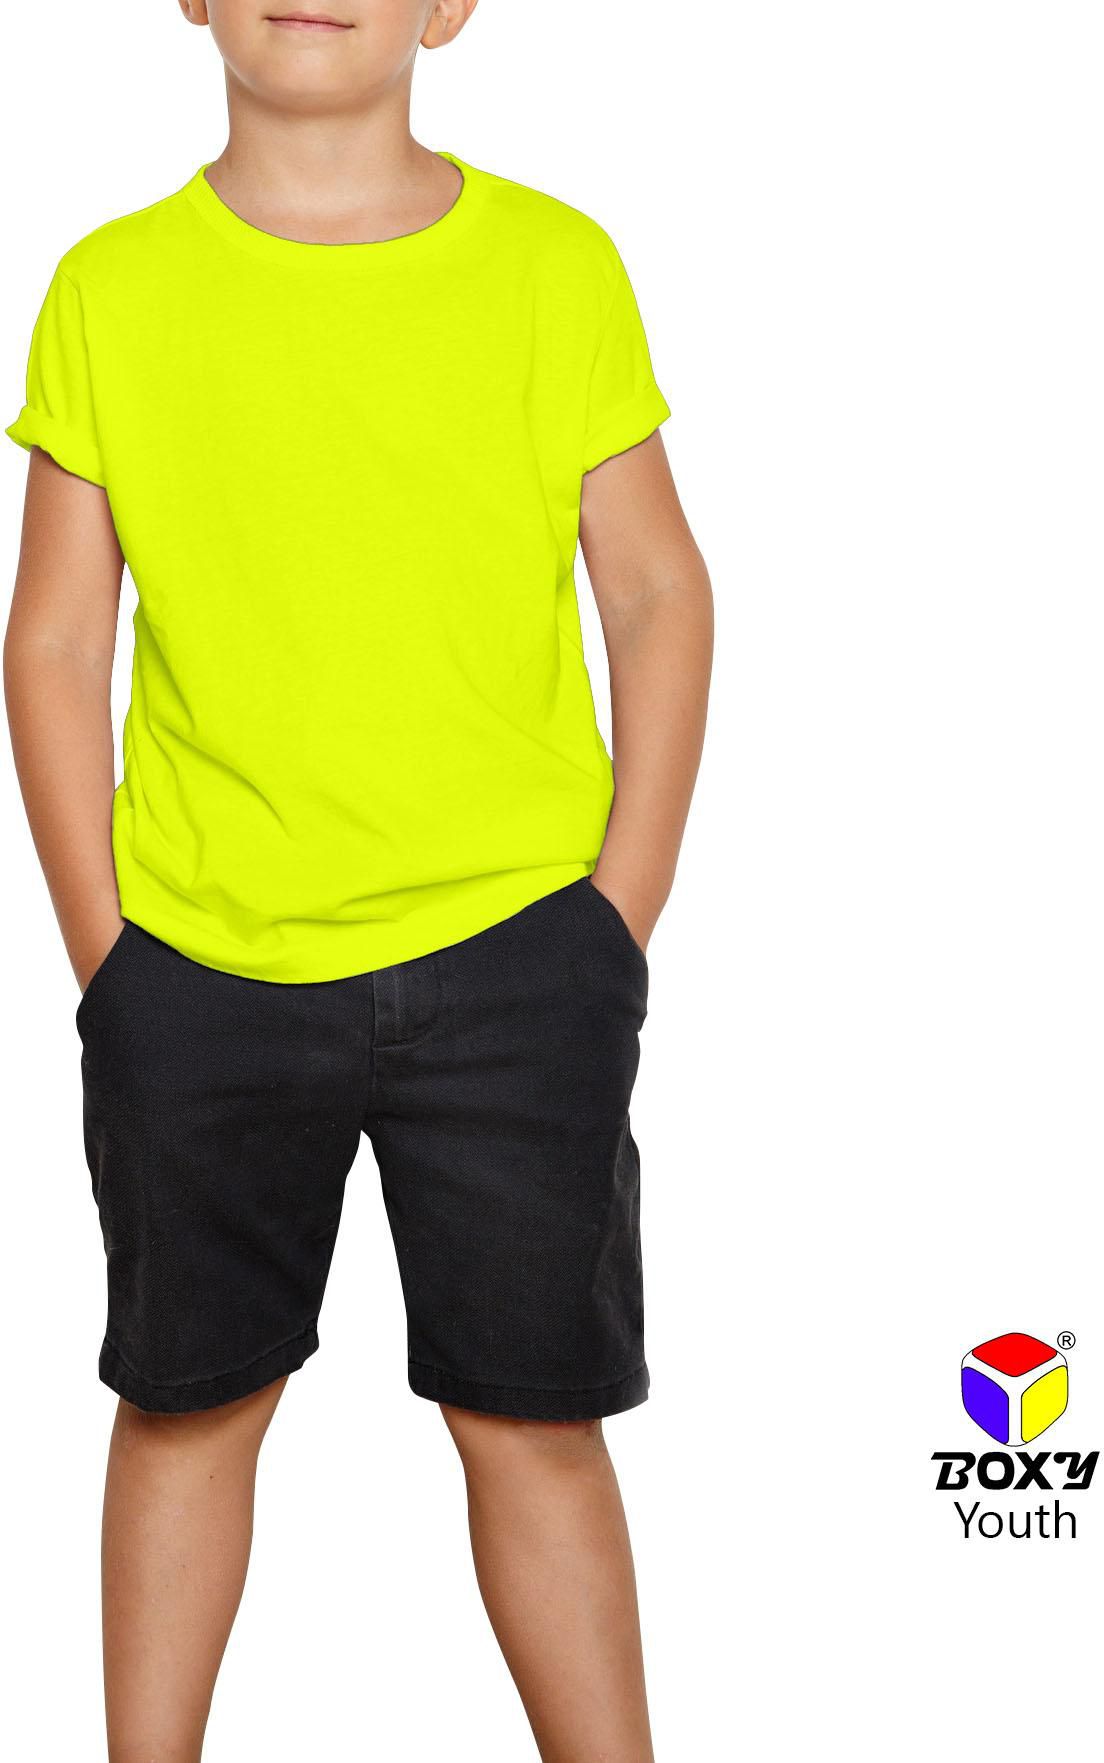 Boxy Youth Microfiber Round Neck T-shirt - 5 Sizes (Yellow)